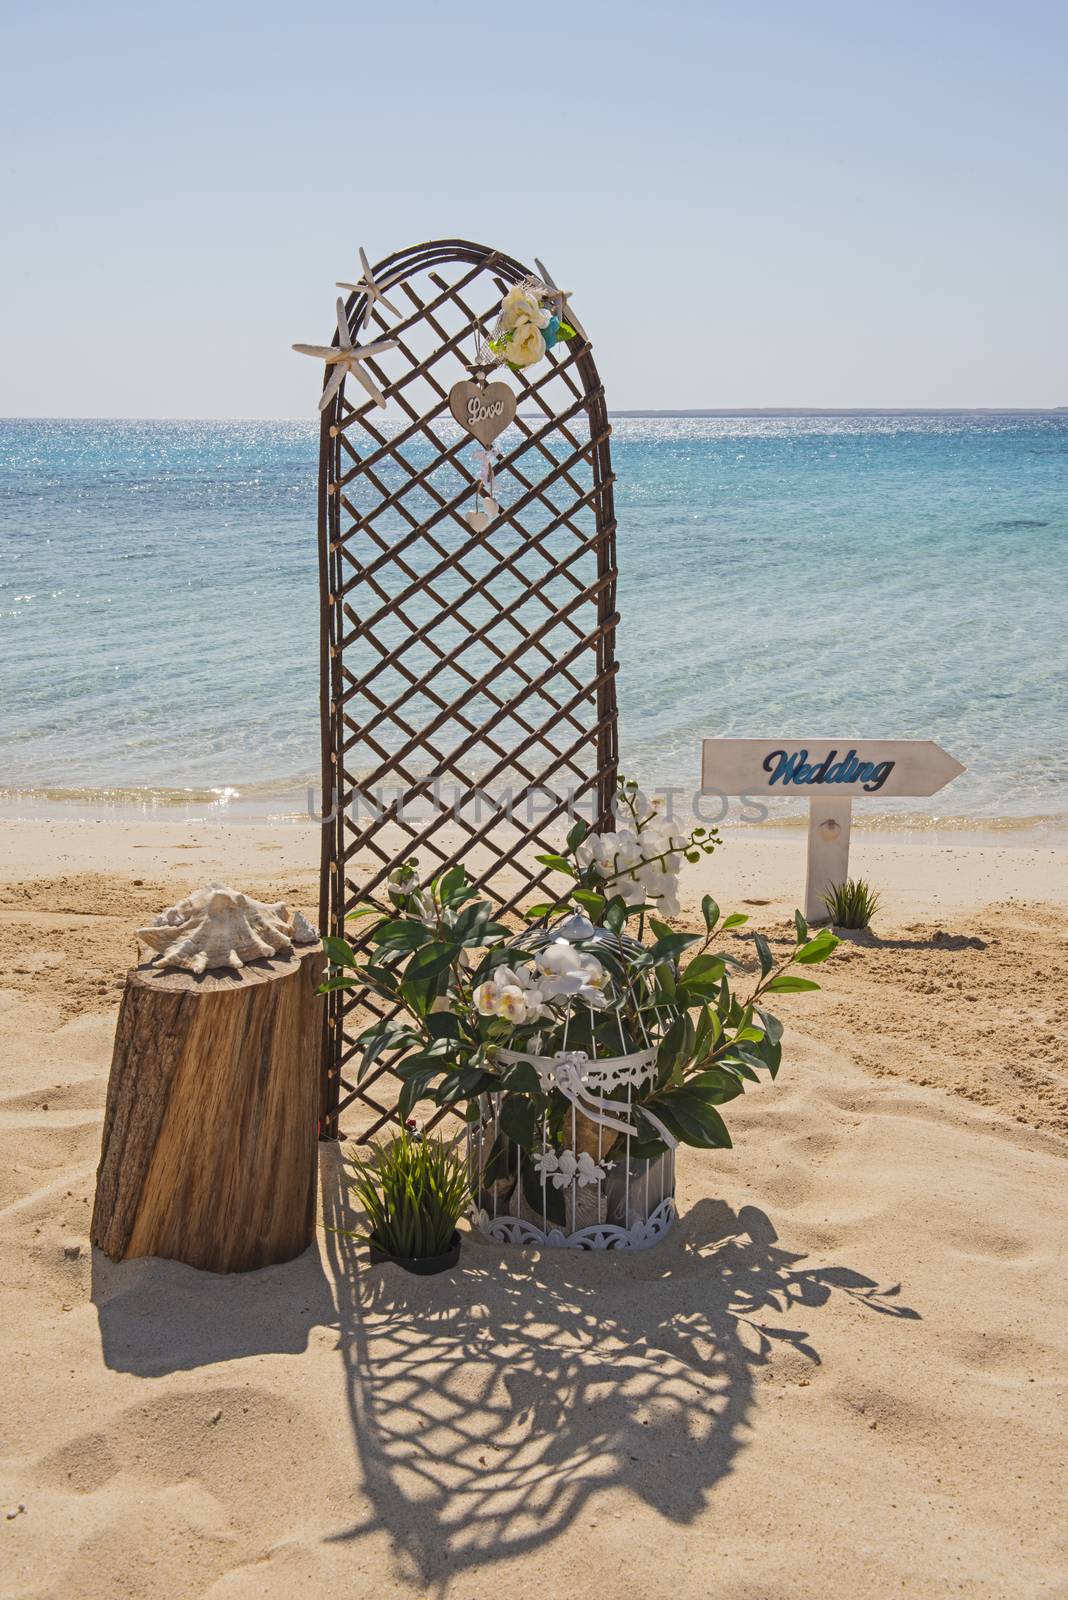 Wedding sign set up on a tropical beach paradise by paulvinten